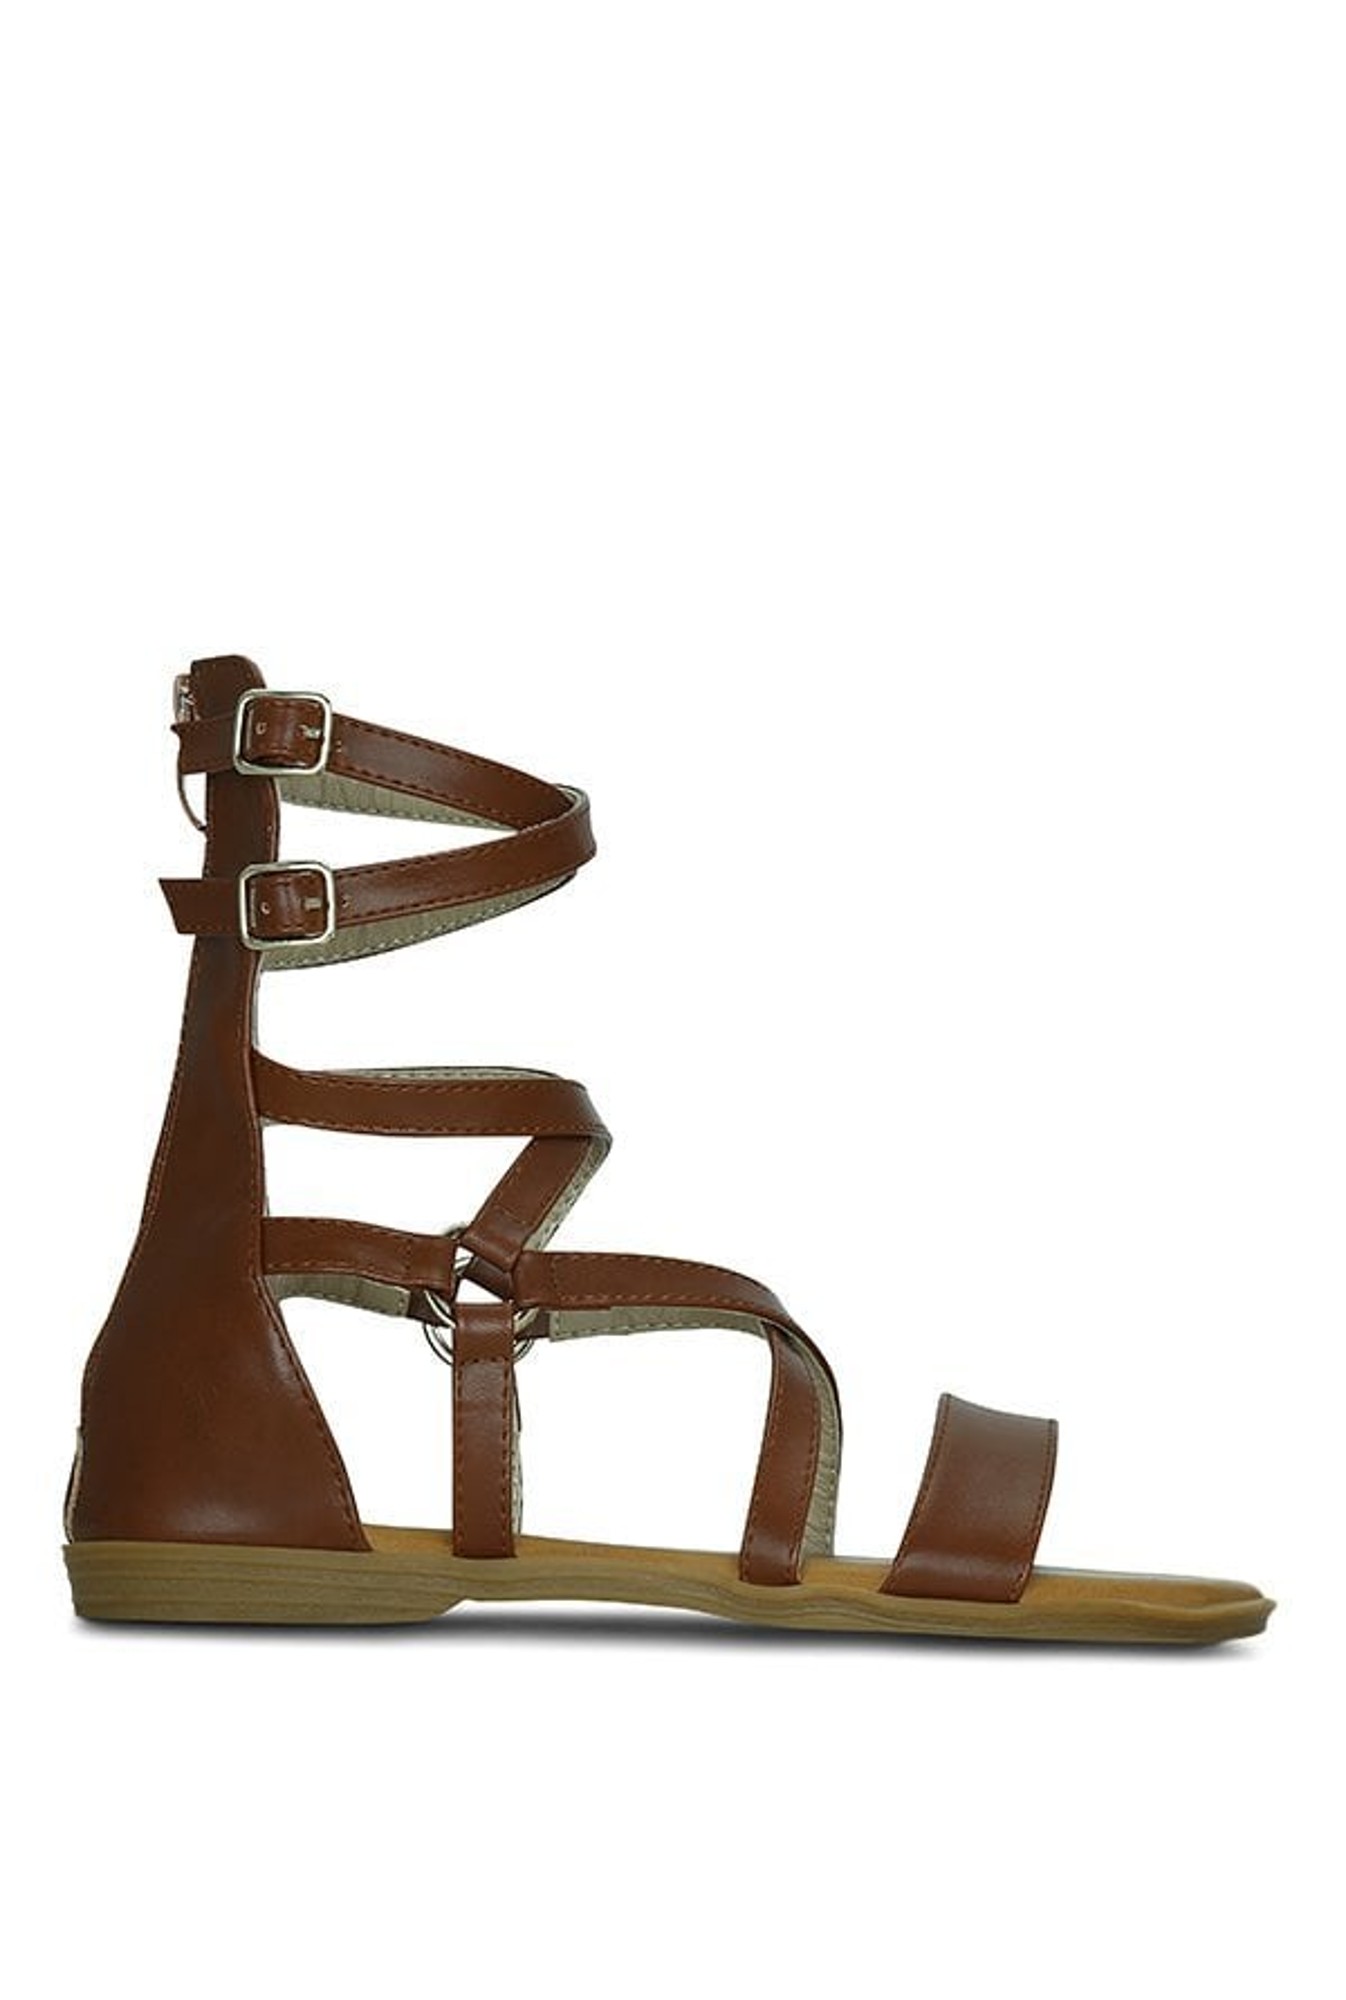 Share 193+ brown gladiator sandals online india super hot